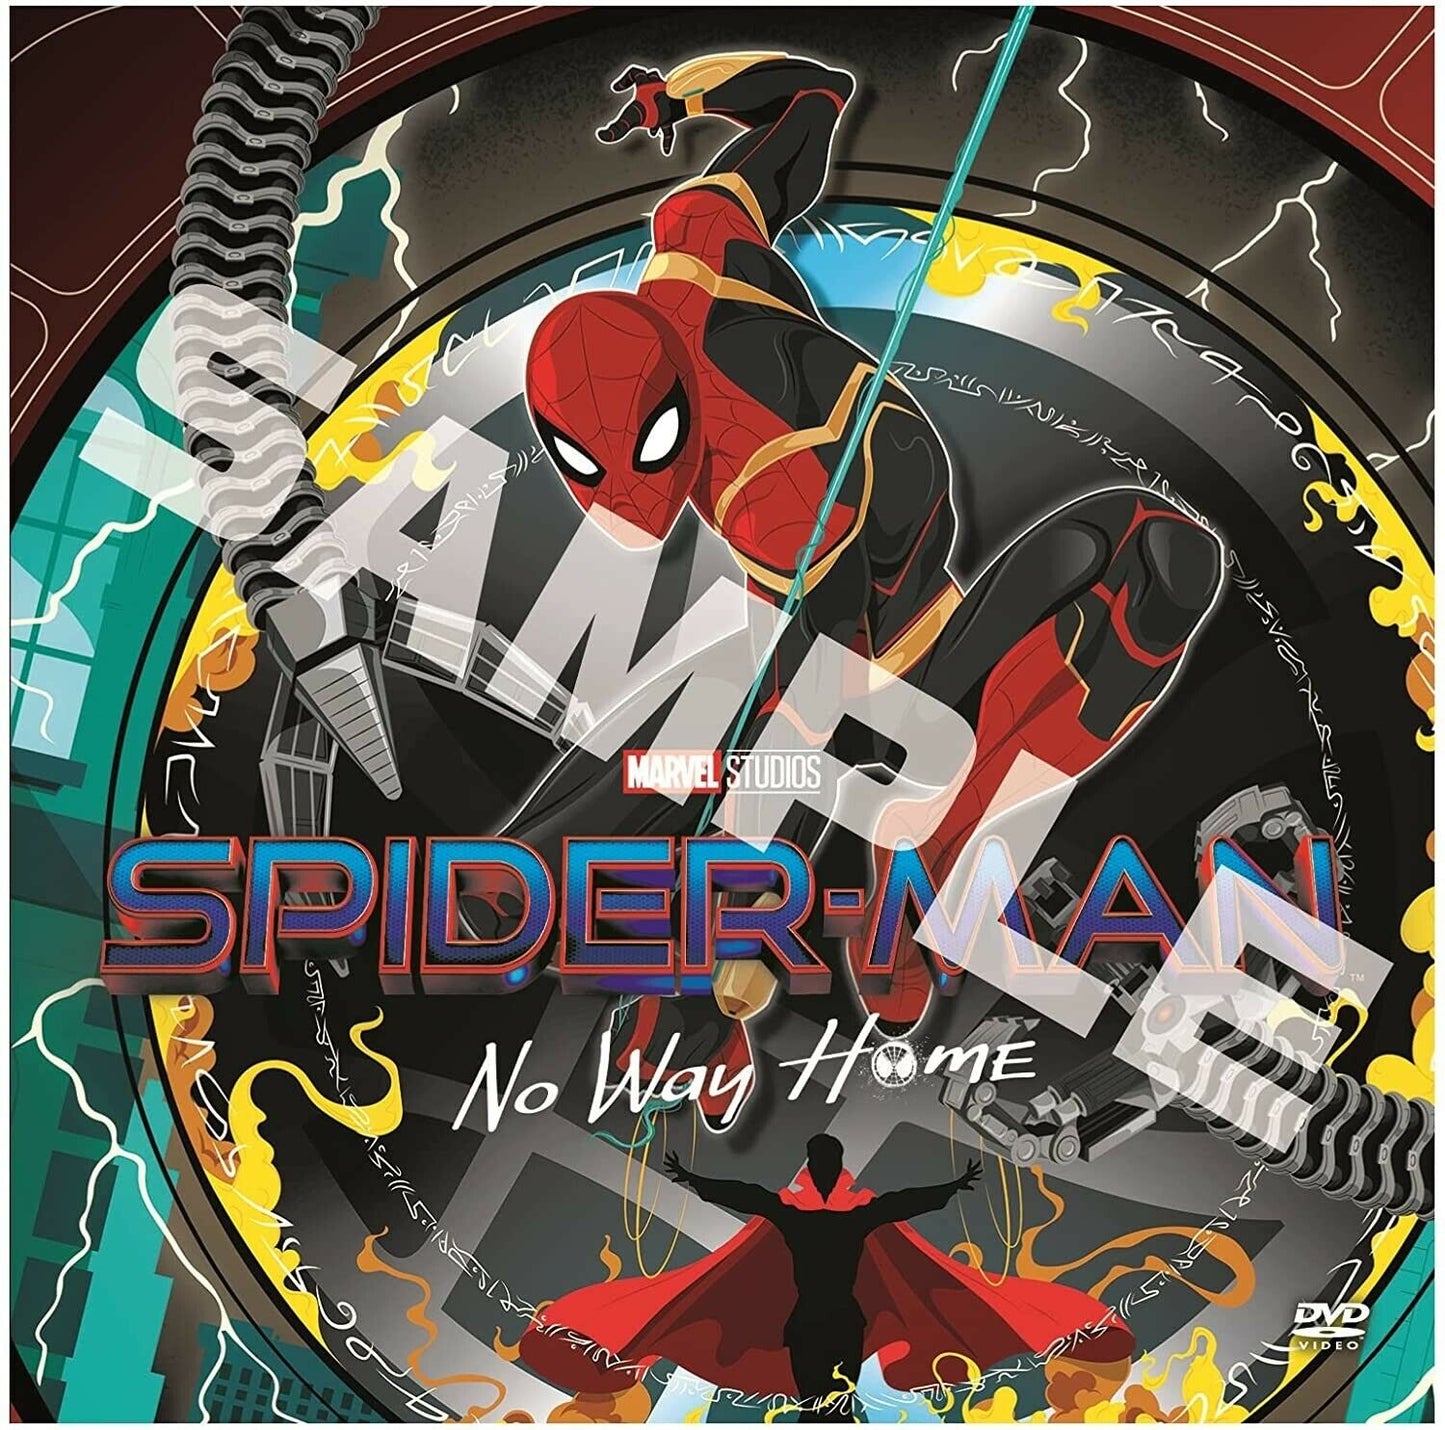 Spider-Man: No Way Home 4K Blu-ray Steelbook Amazon Japan Exclusive